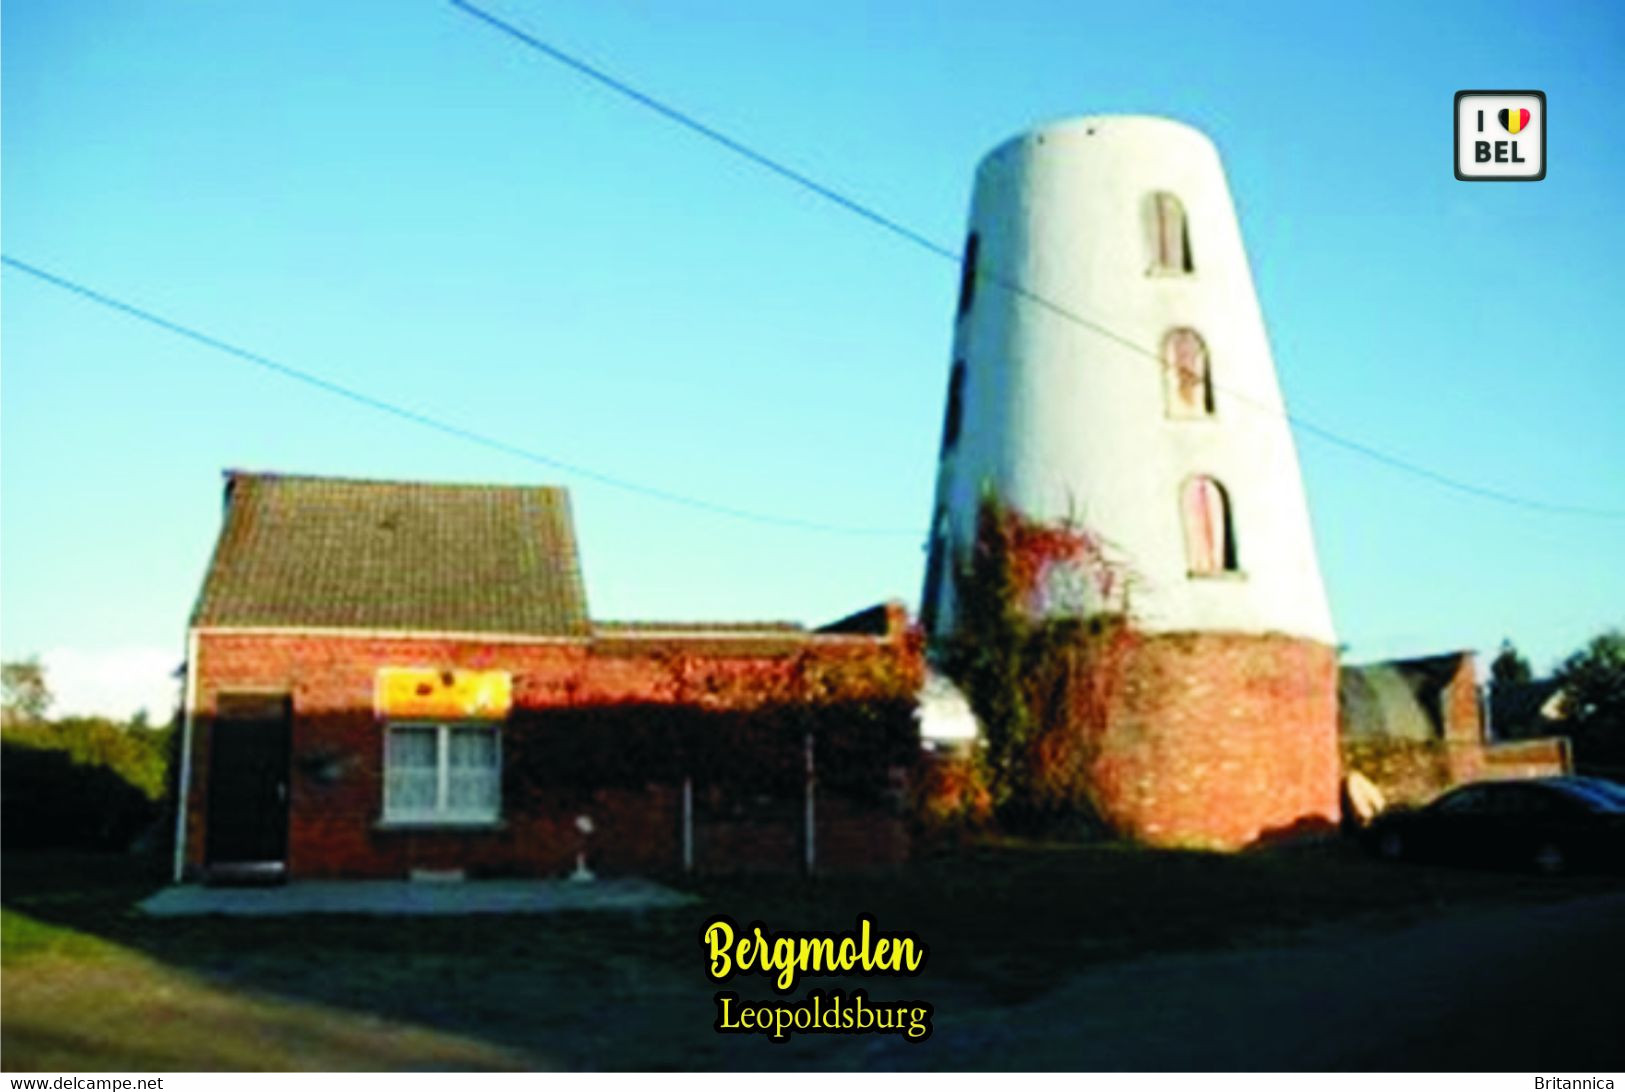 Carte Postale, Moulin A Vent, Belgium (Limburg), Leopoldsburg, Bergmolen - Windmills